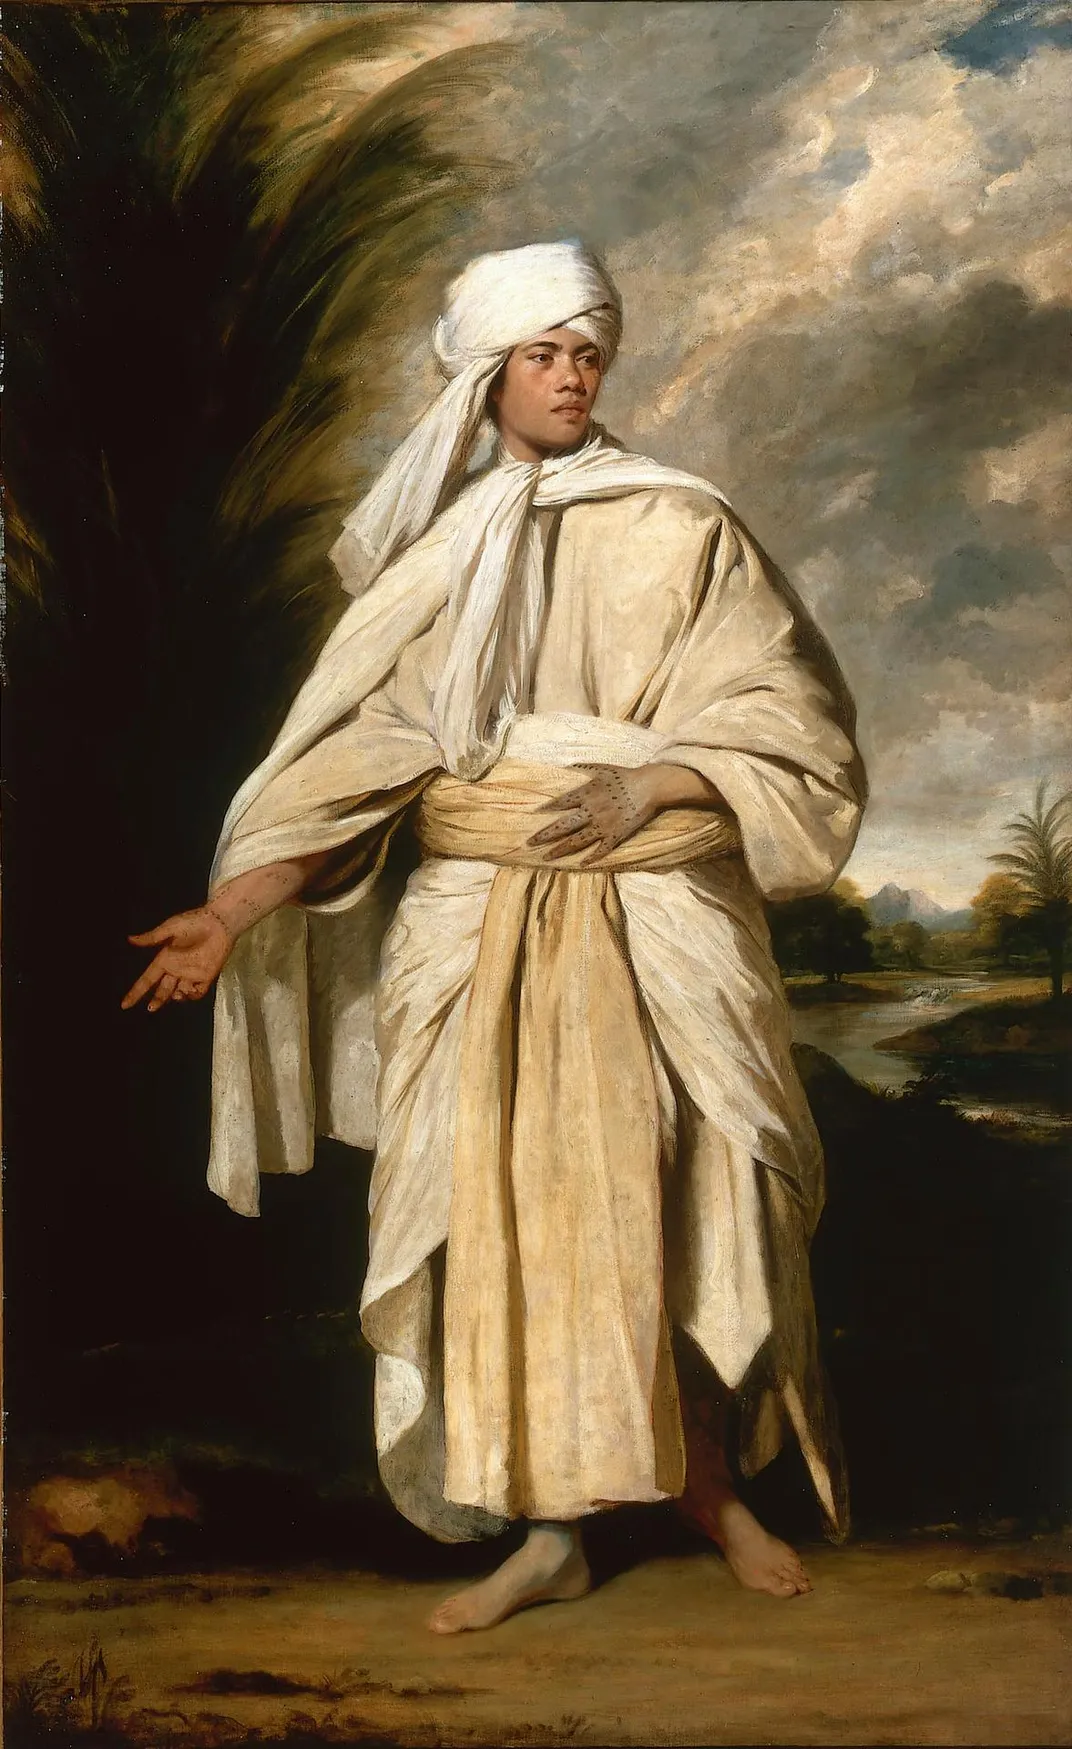 The full-length Joshua Reynolds portrait of Mai